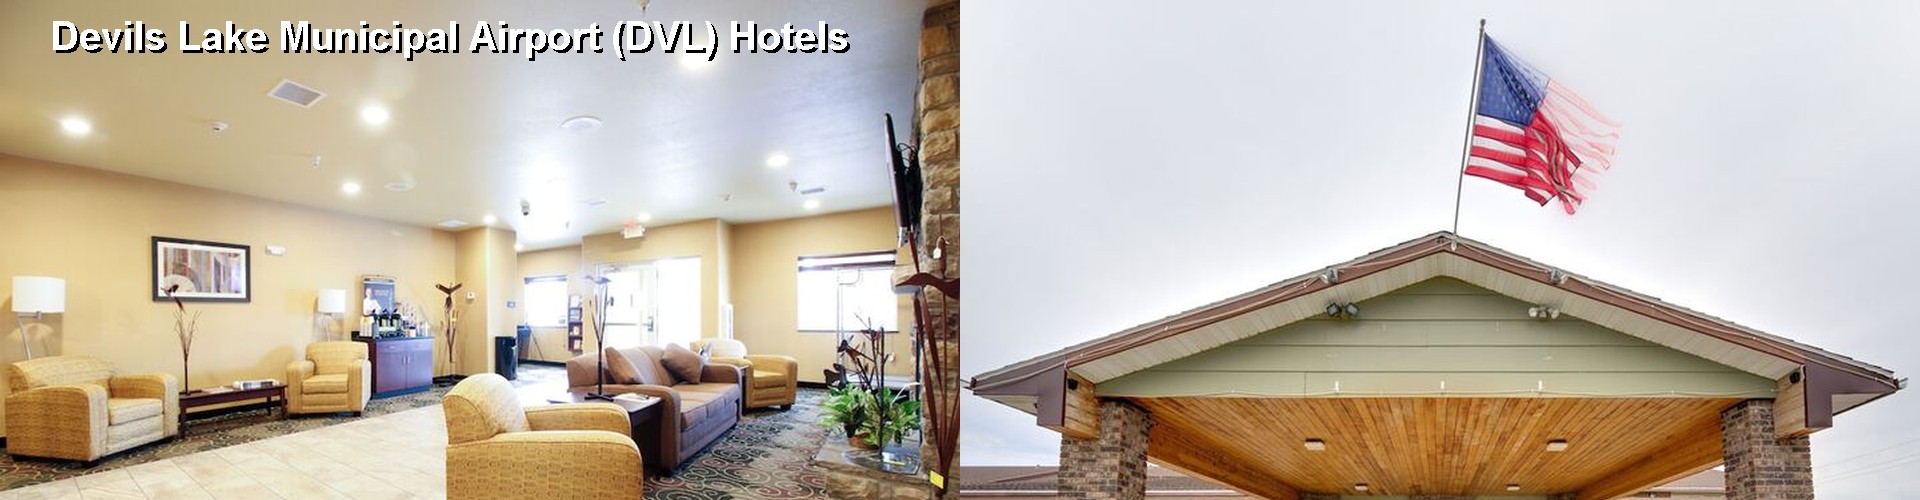 5 Best Hotels near Devils Lake Municipal Airport (DVL)